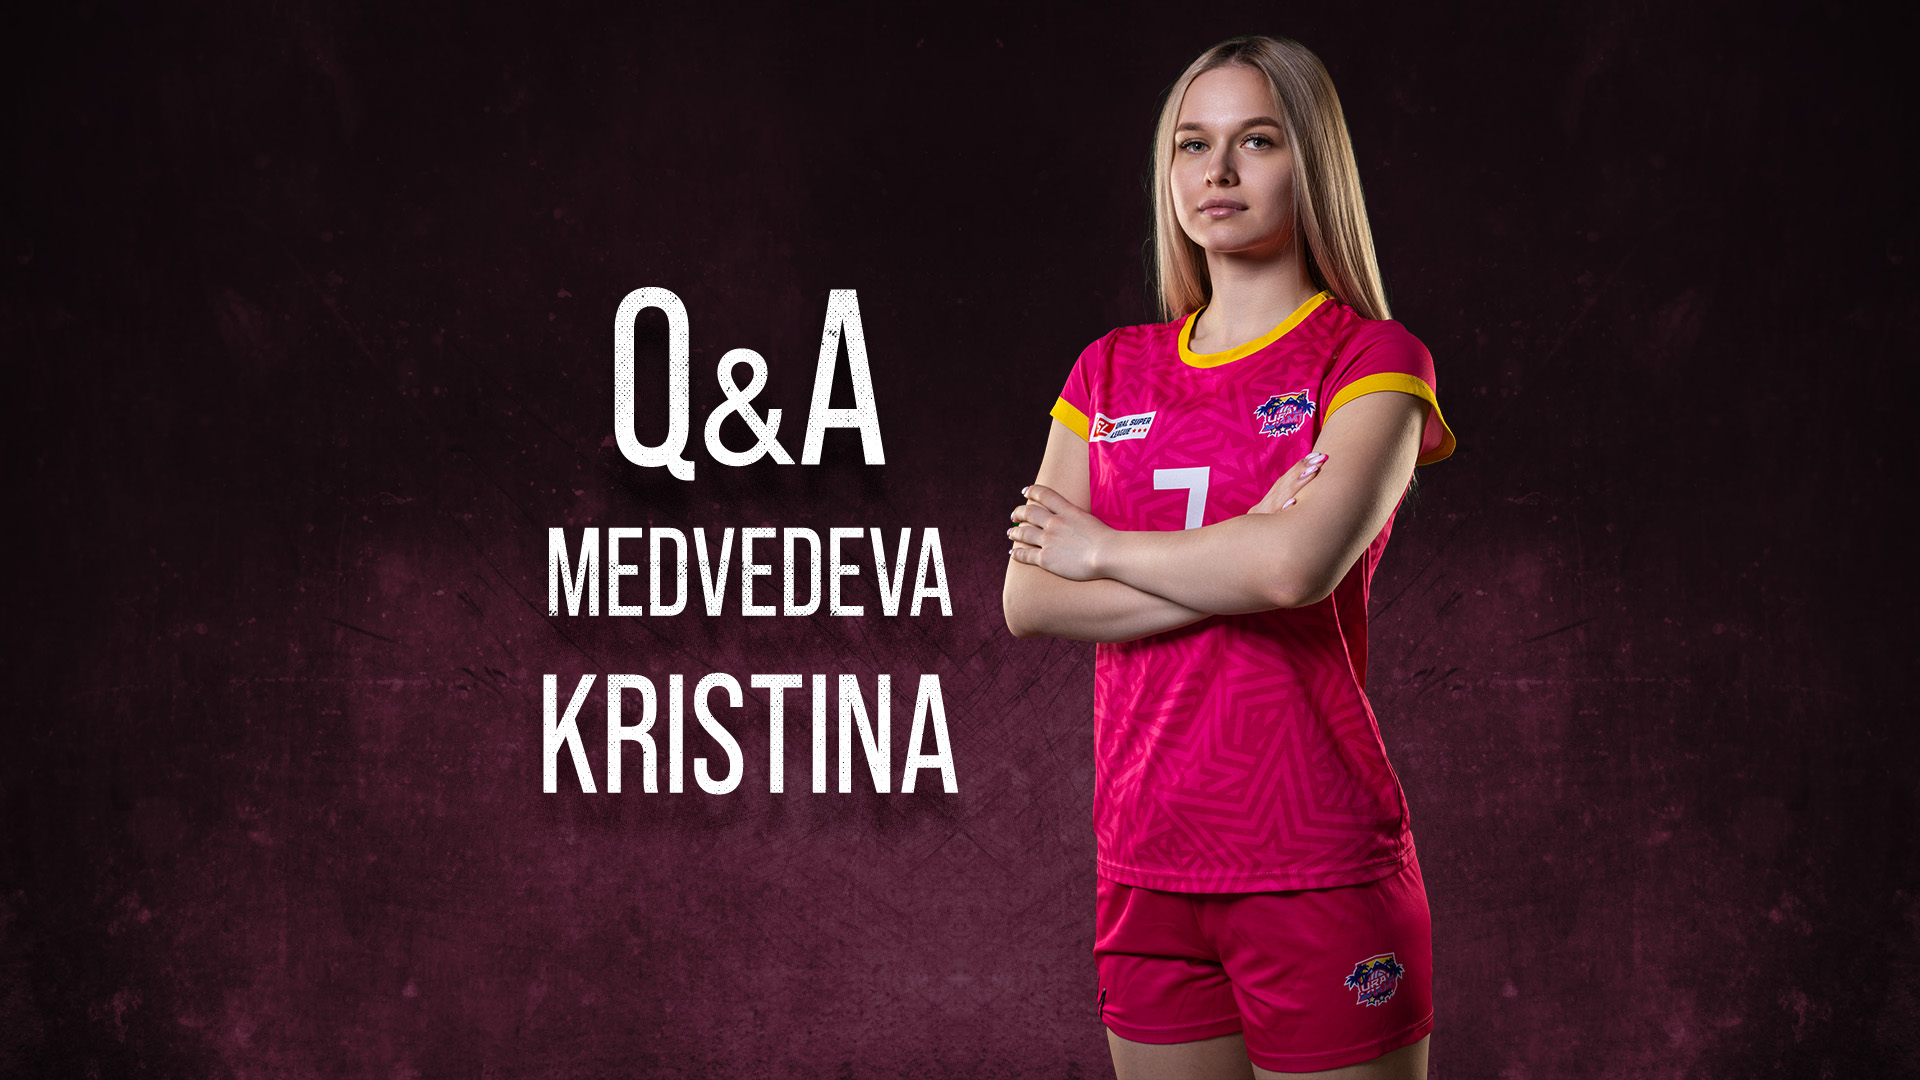 Q & A .Kristina Medvedeva